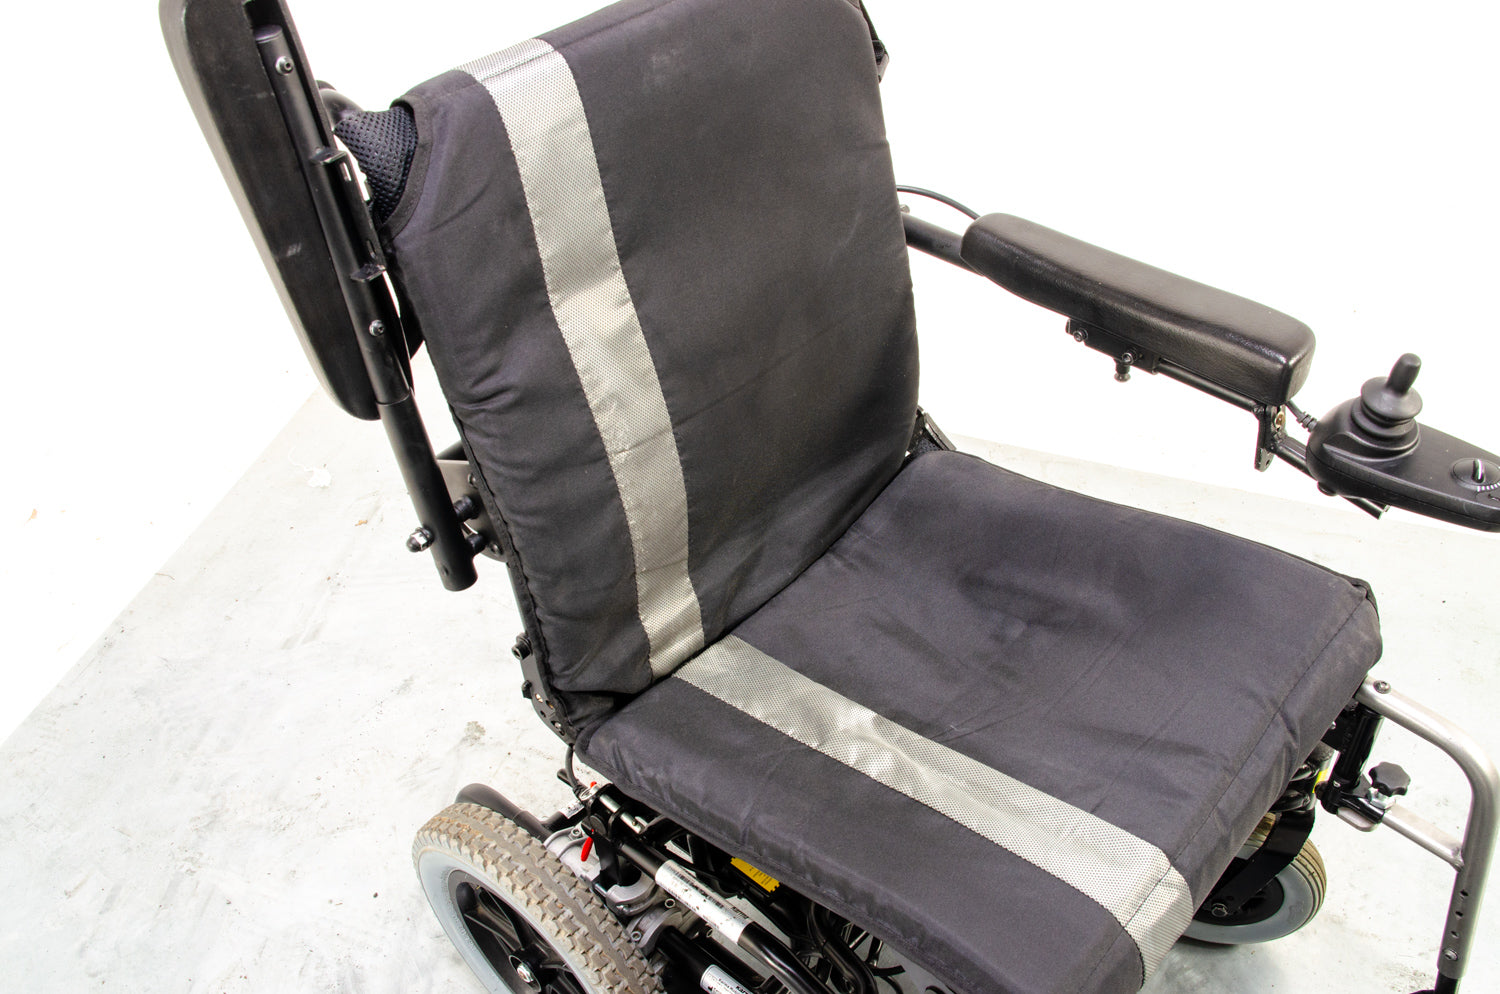 Karma Ergo Traveller Used Electric Wheelchair Powerchair Folding Transportable Black